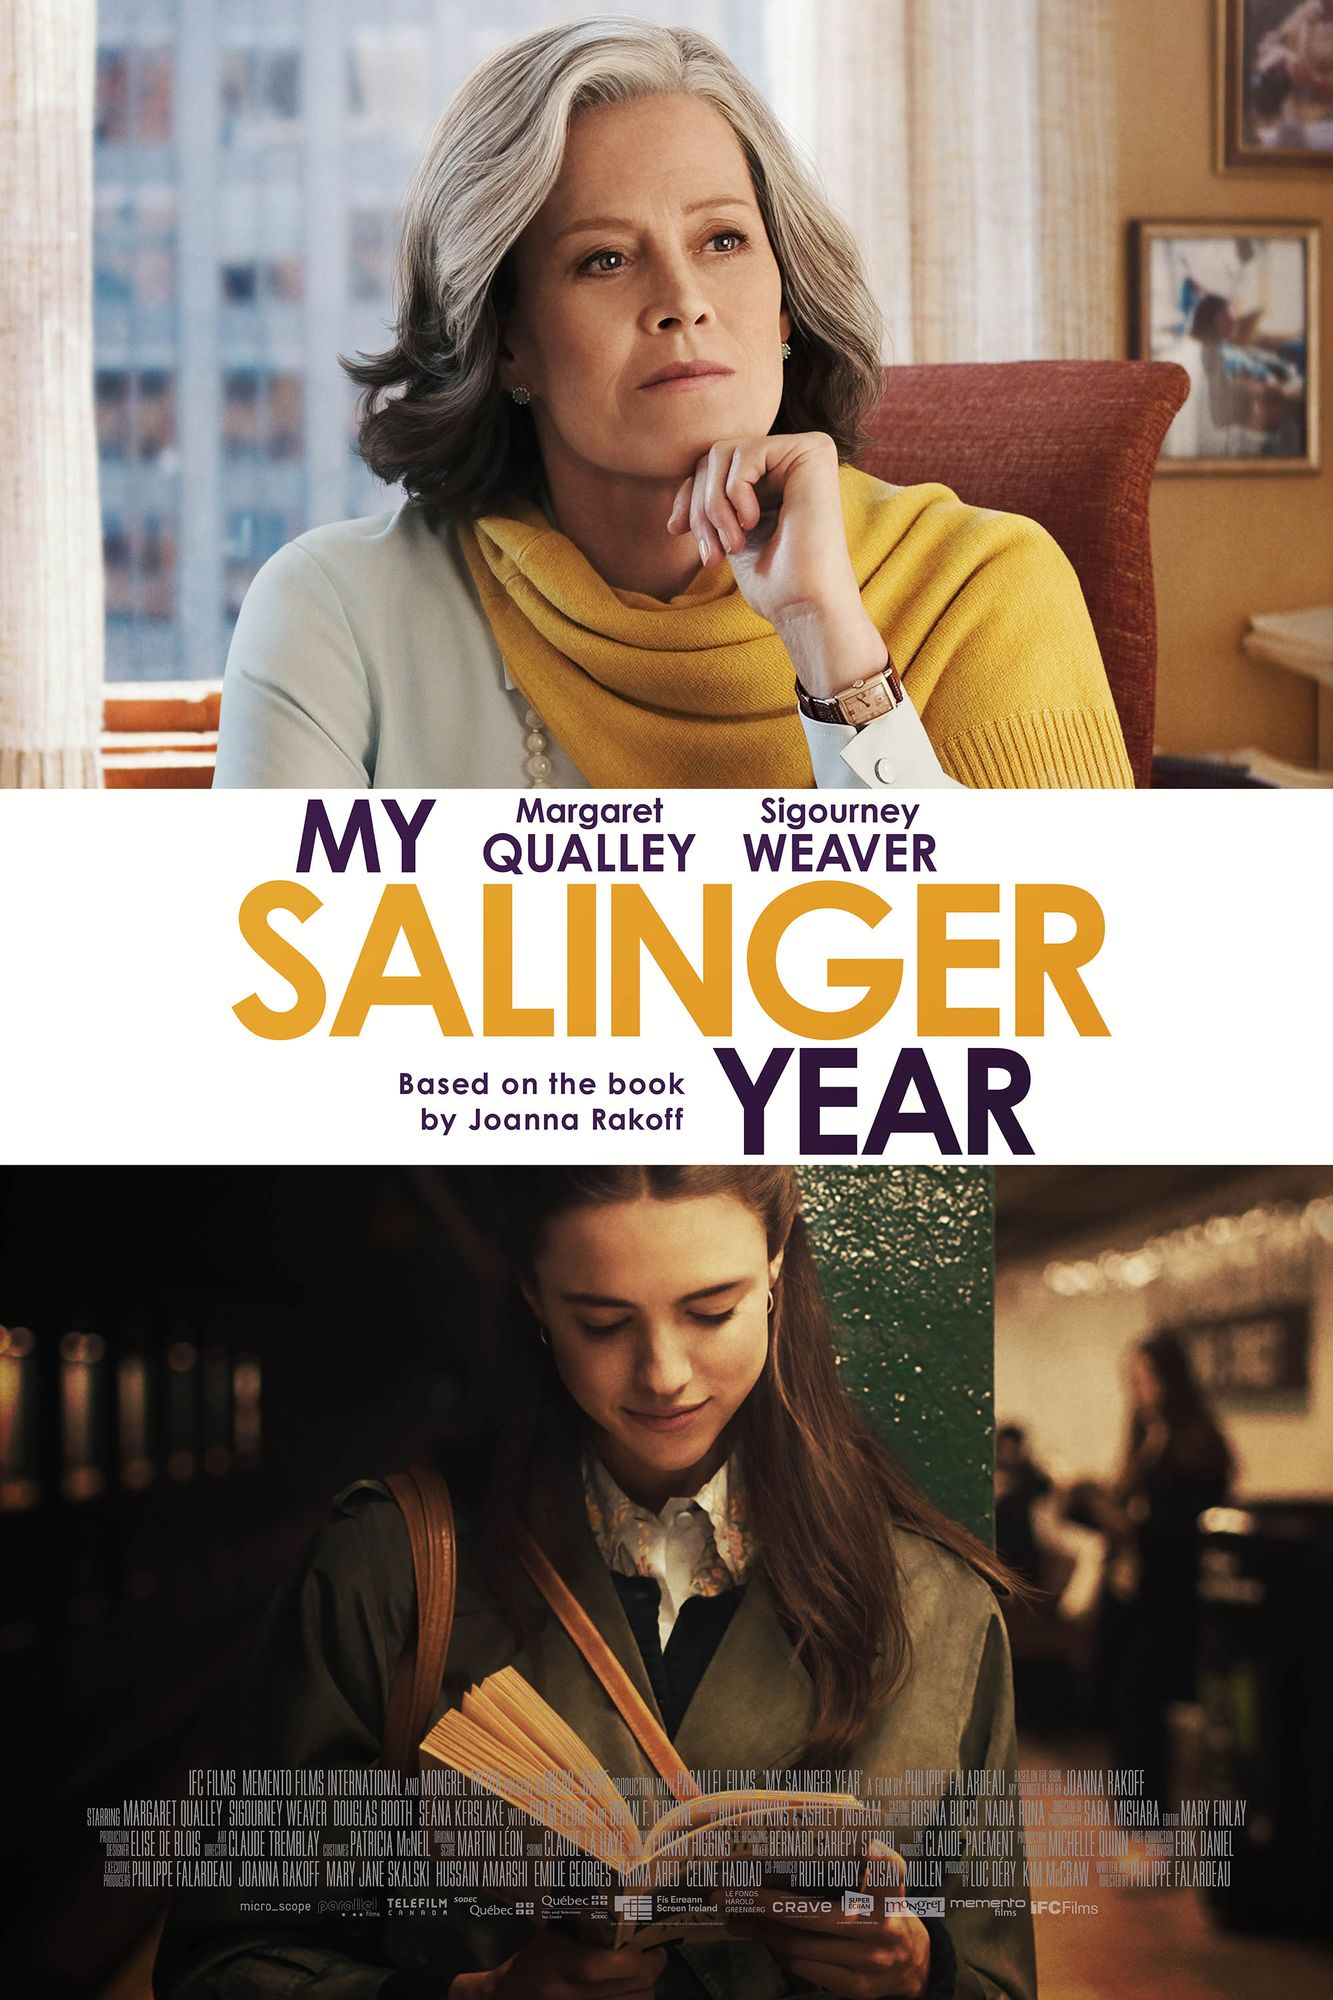 My Salinger Year